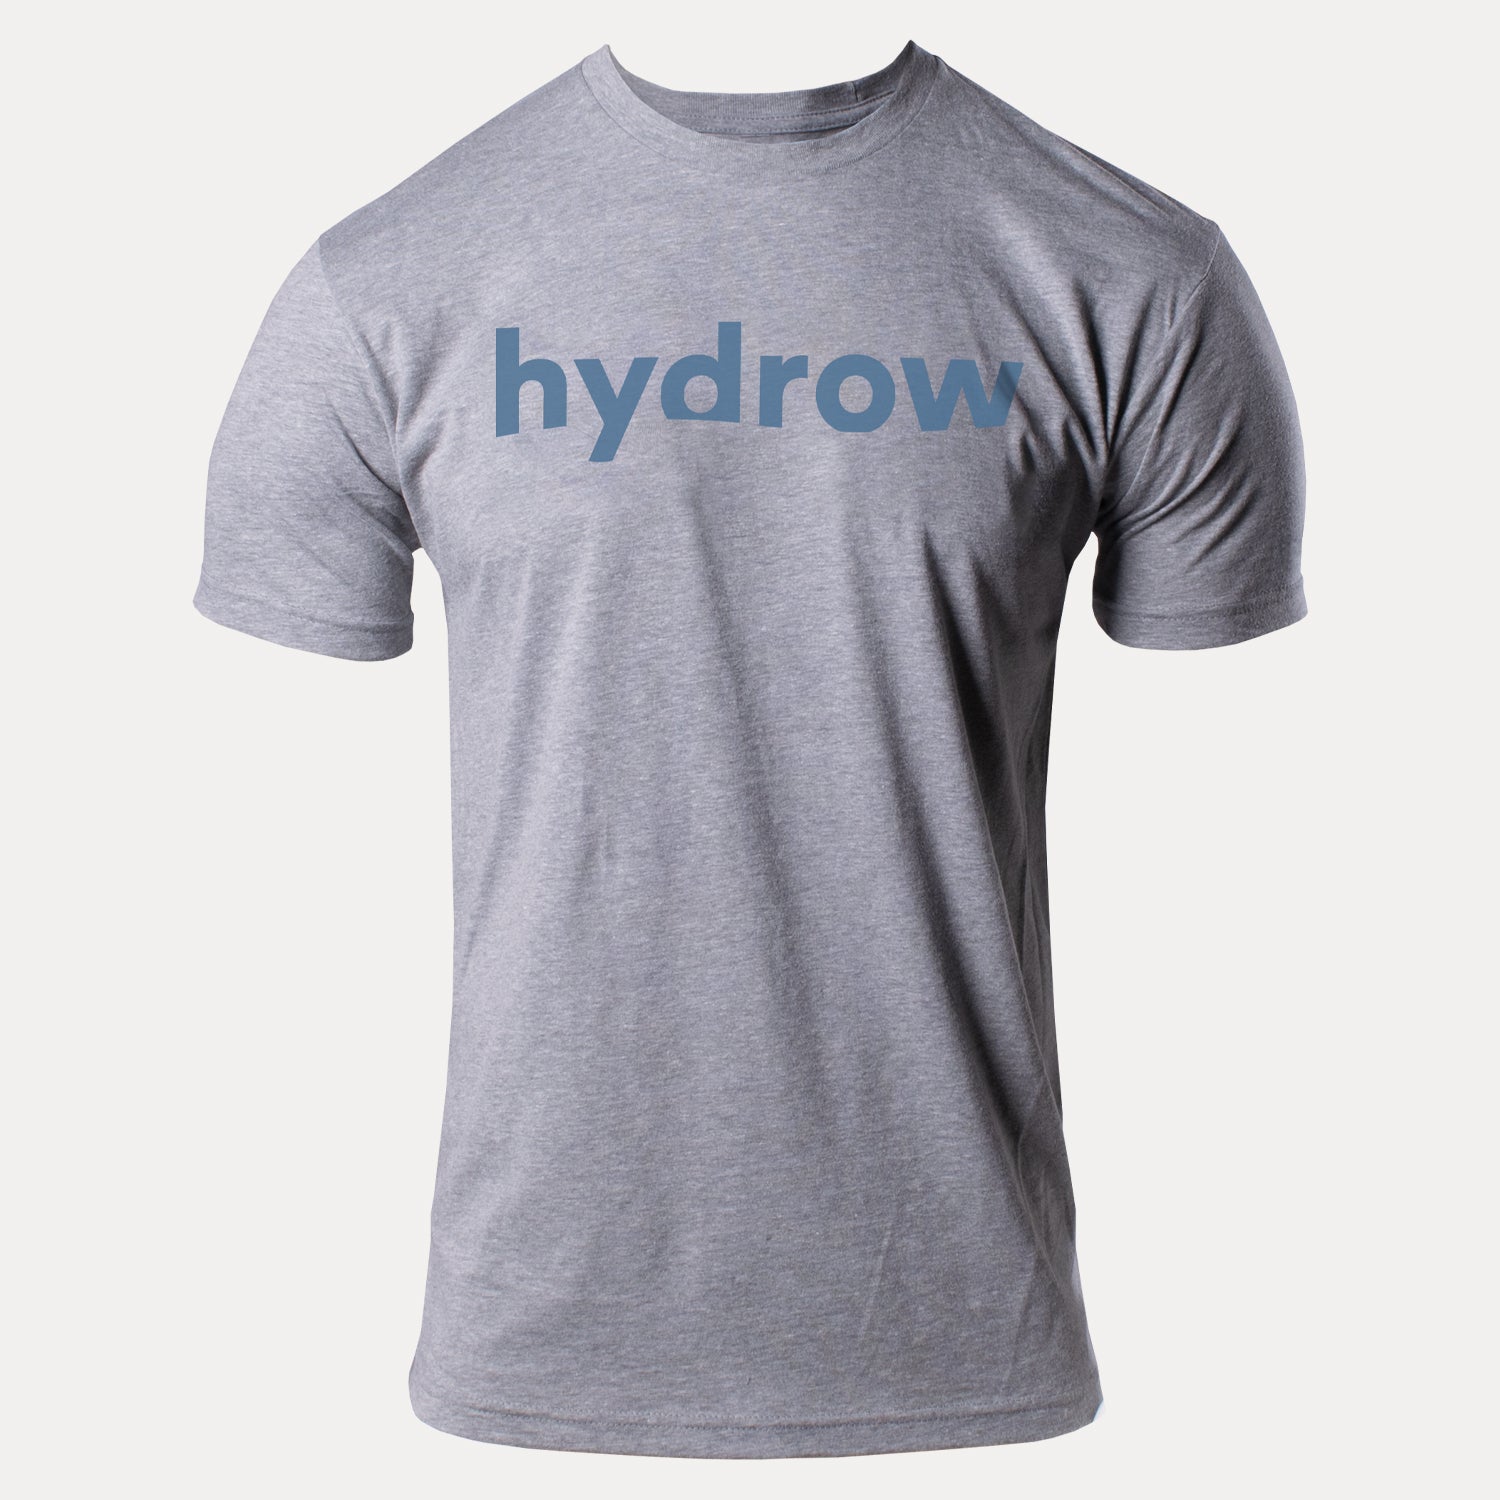 Hydrow Crew Neck T-Shirt - Hydrow Apparel Store